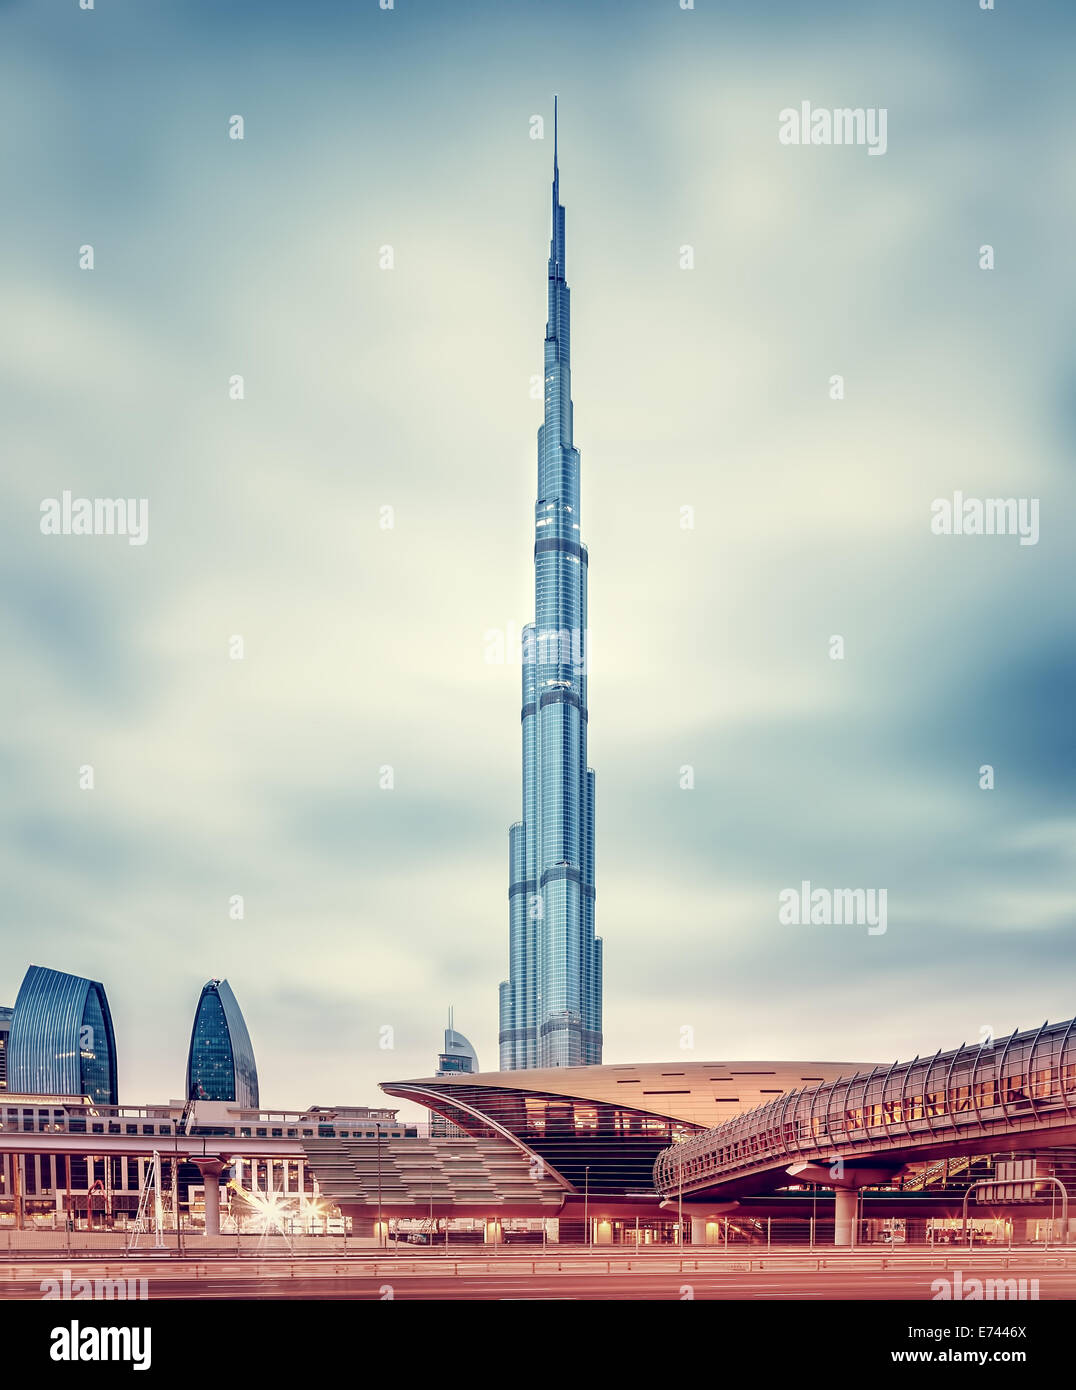 DUBAI, UAE - FEBRUARY 09: Burj Khalifa, world's tallest tower at 828m, located at Downtown, modern new metro station on February Stock Photo